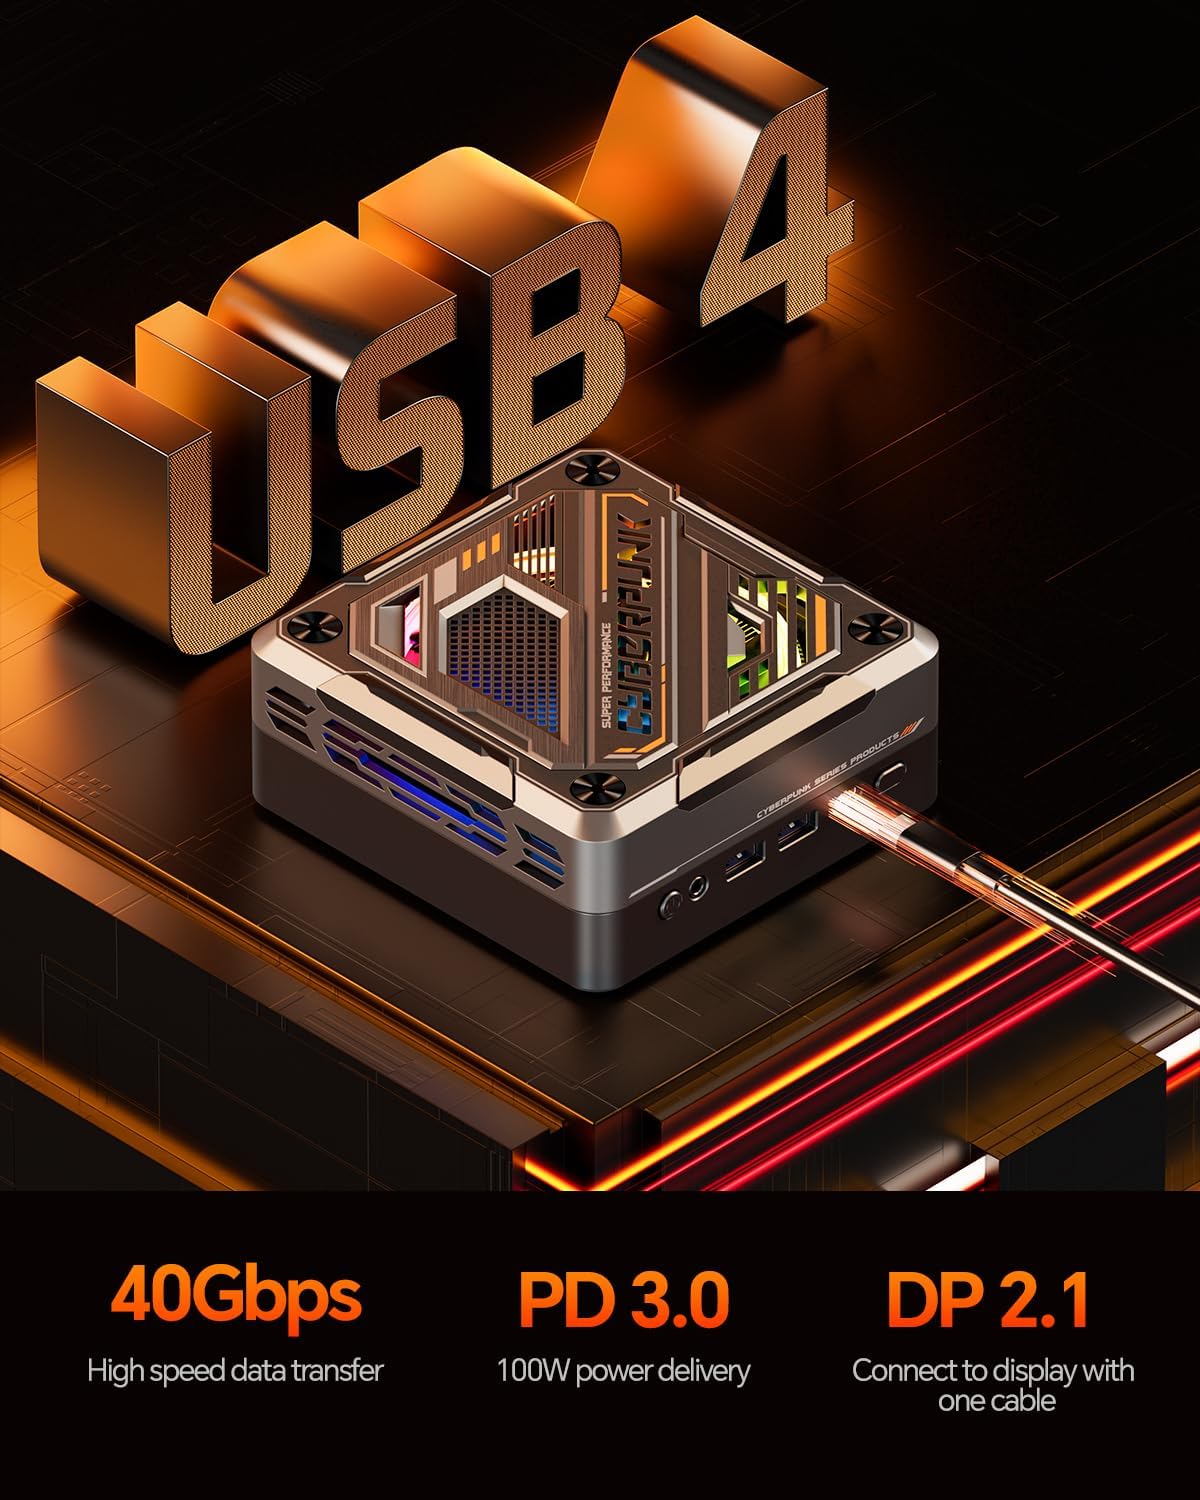 GOD88 AMD Ryzen 7 8845HS Mini Gaming PC(8C/16T/ up to5.1Ghz), Mini PC 32GB RAM 1T NVME SSD with W11 PRO,Small PC Has Large Size Fan RGB Light, 2.5G LAN, 4K Display HDMI DP USB4